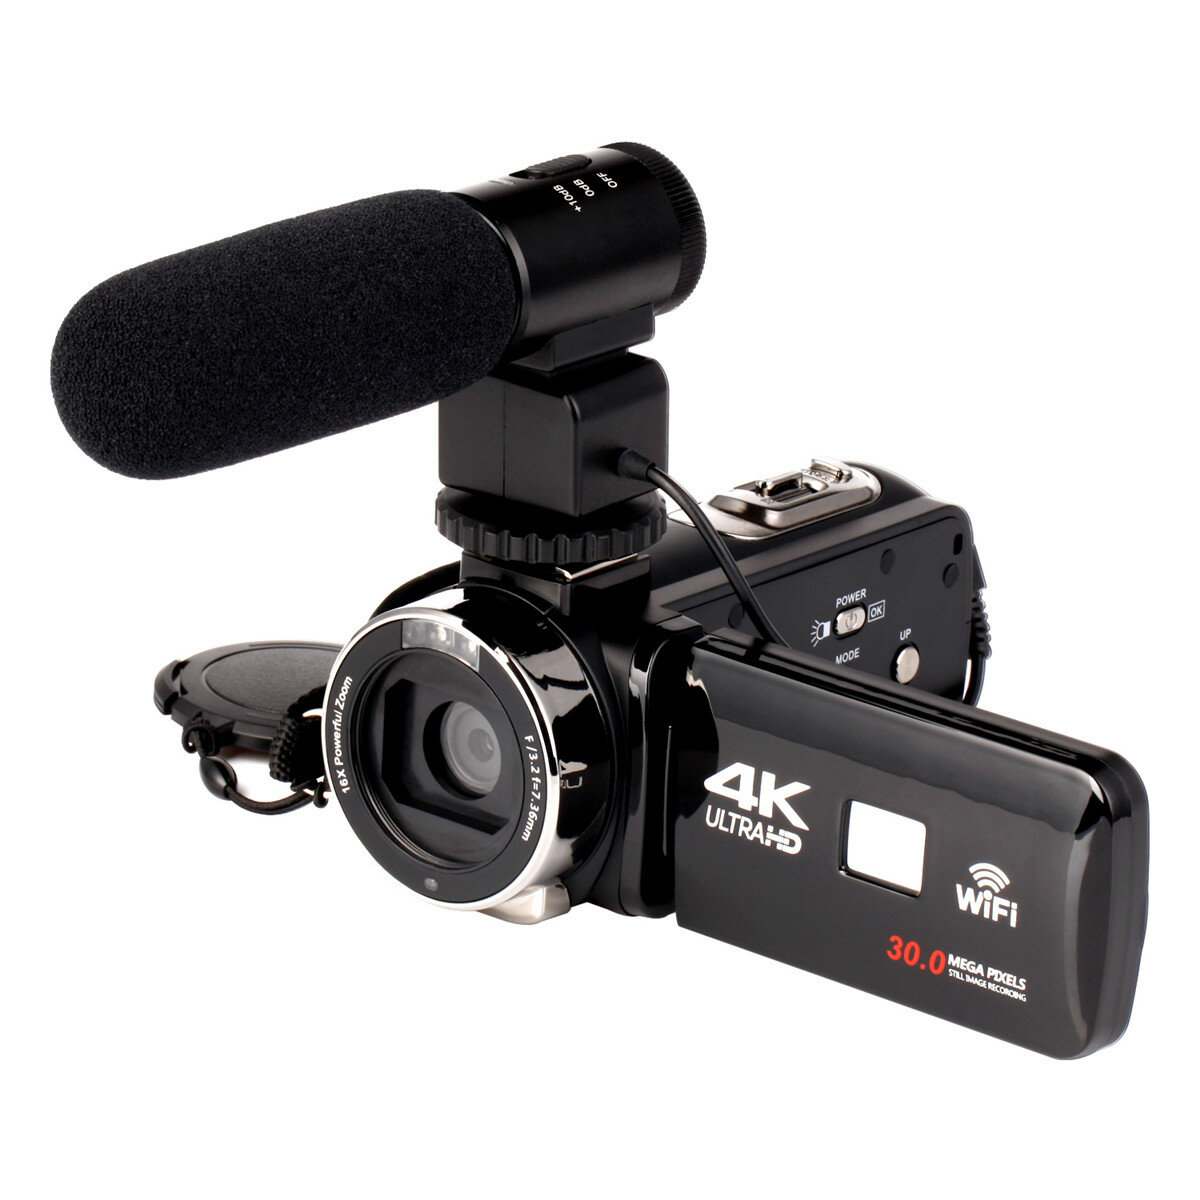 1080p video camera